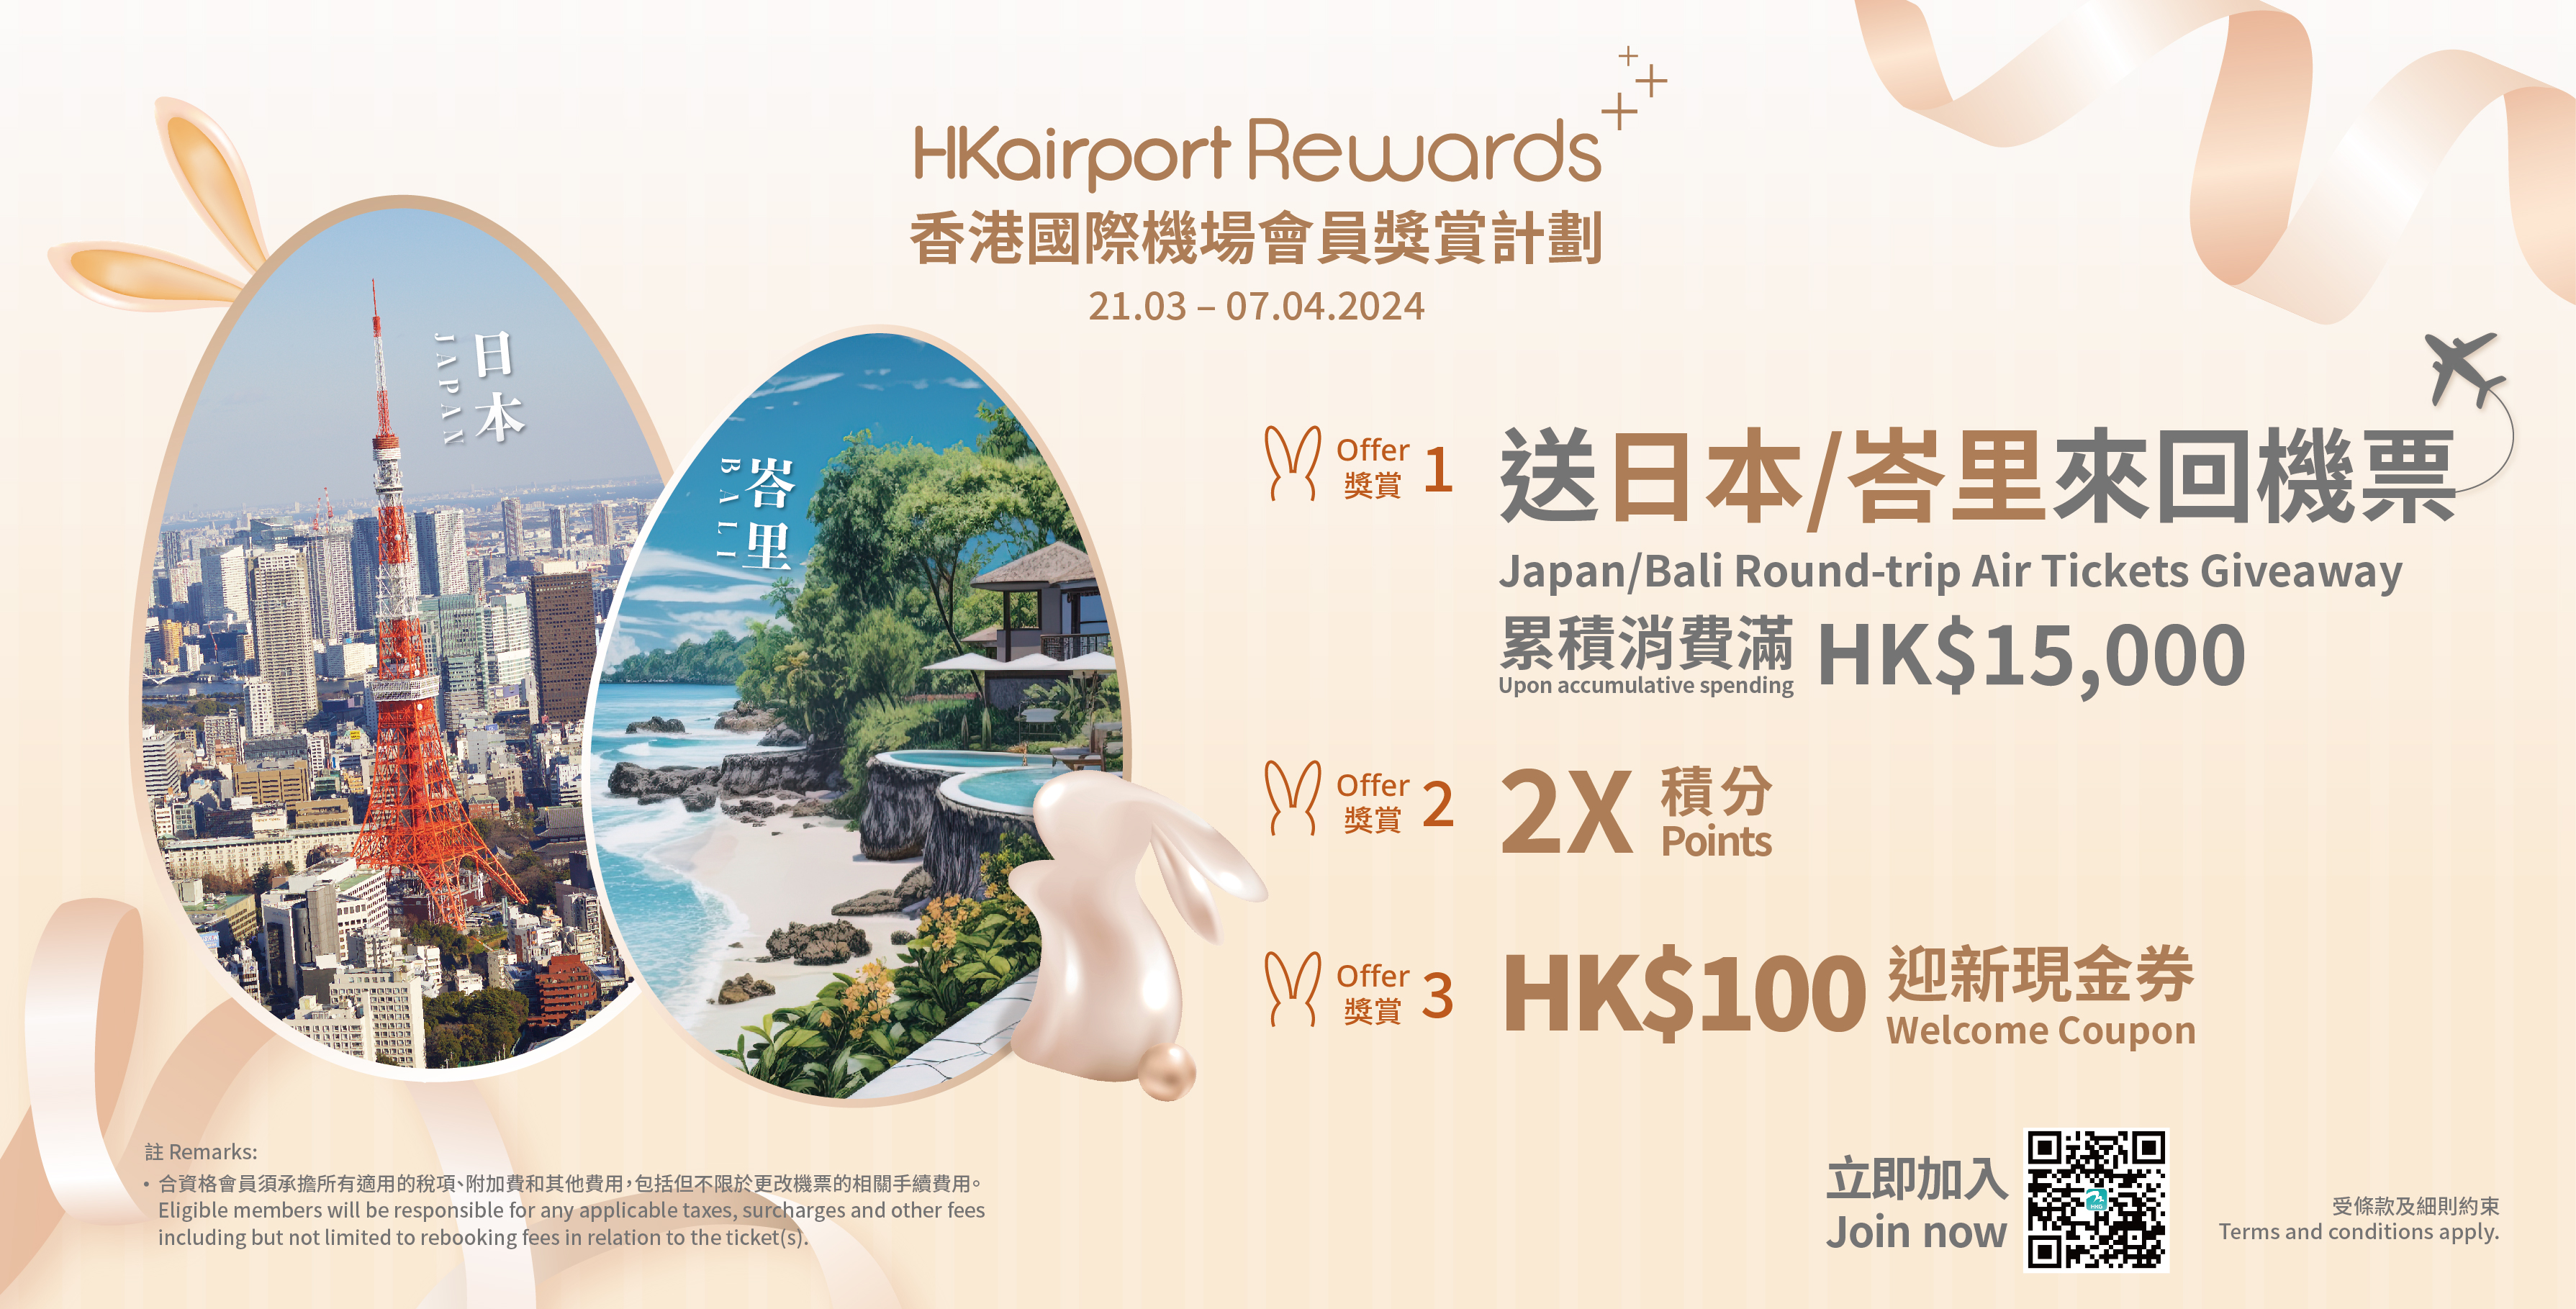 「HKairport Rewards」復活節三重賞